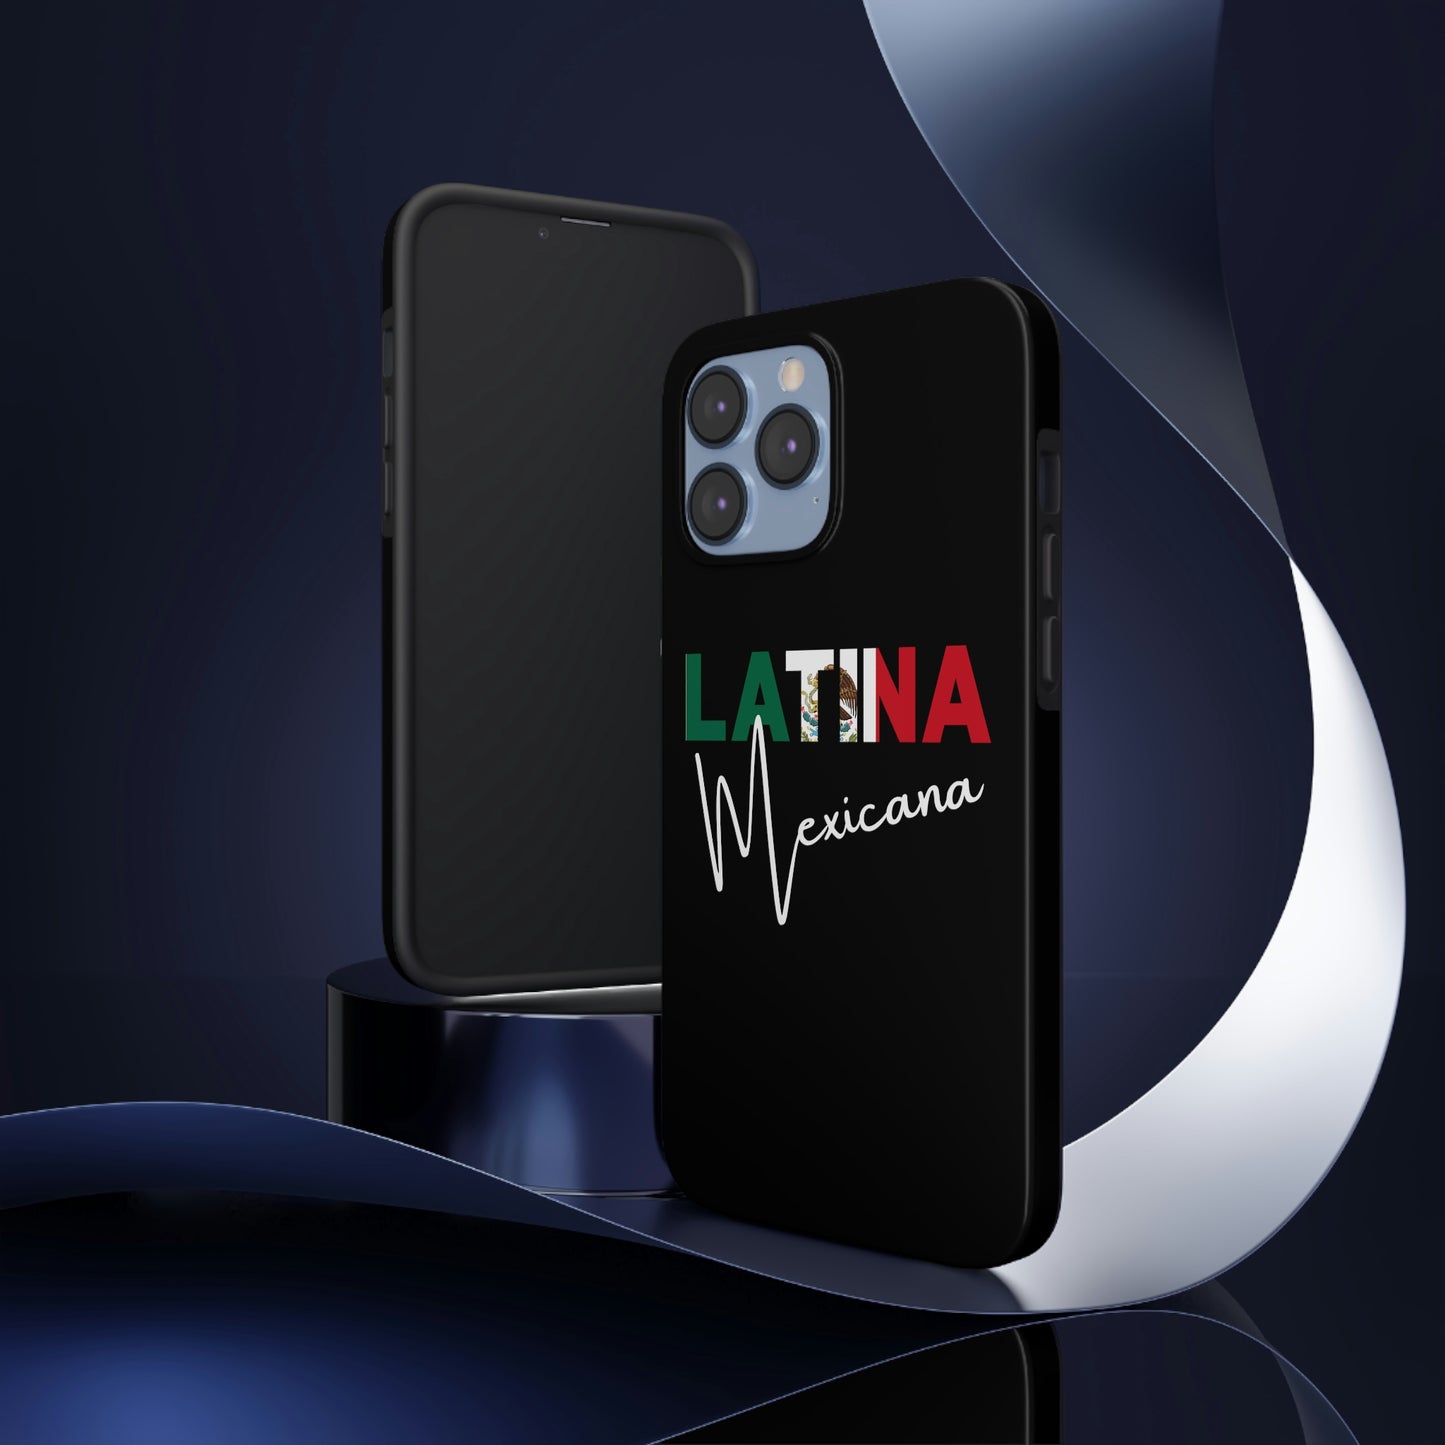 Latina Mexicana, iPhone Hard Case